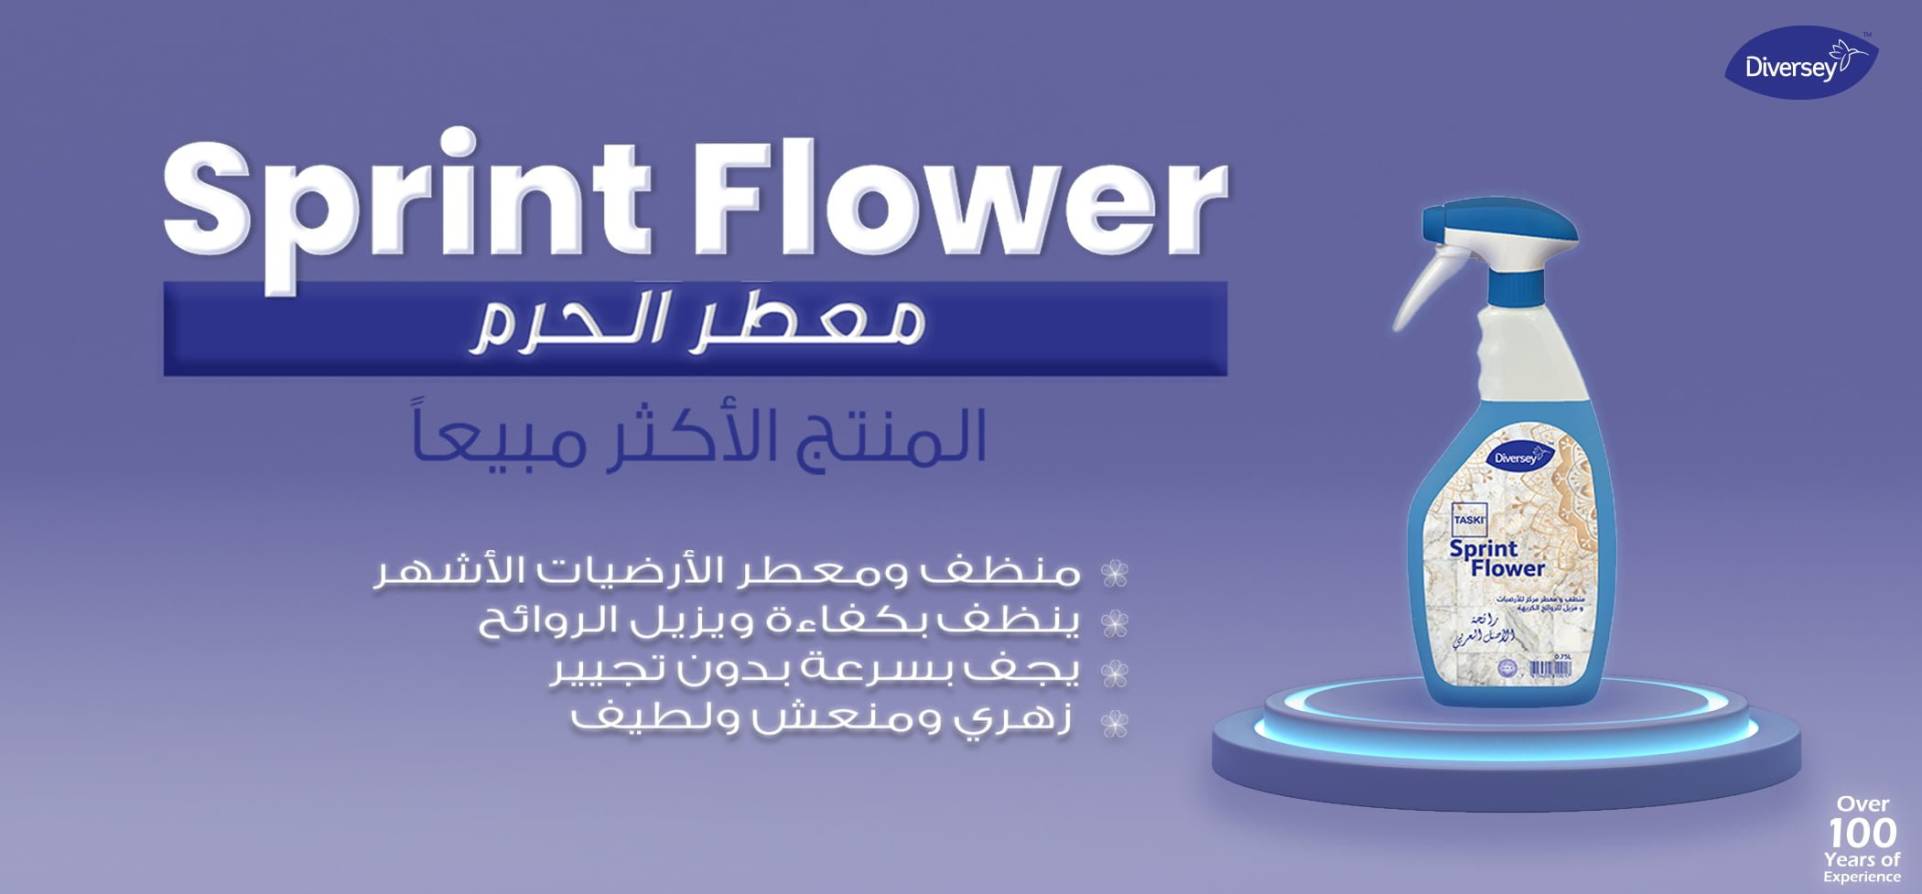 Sprint flower